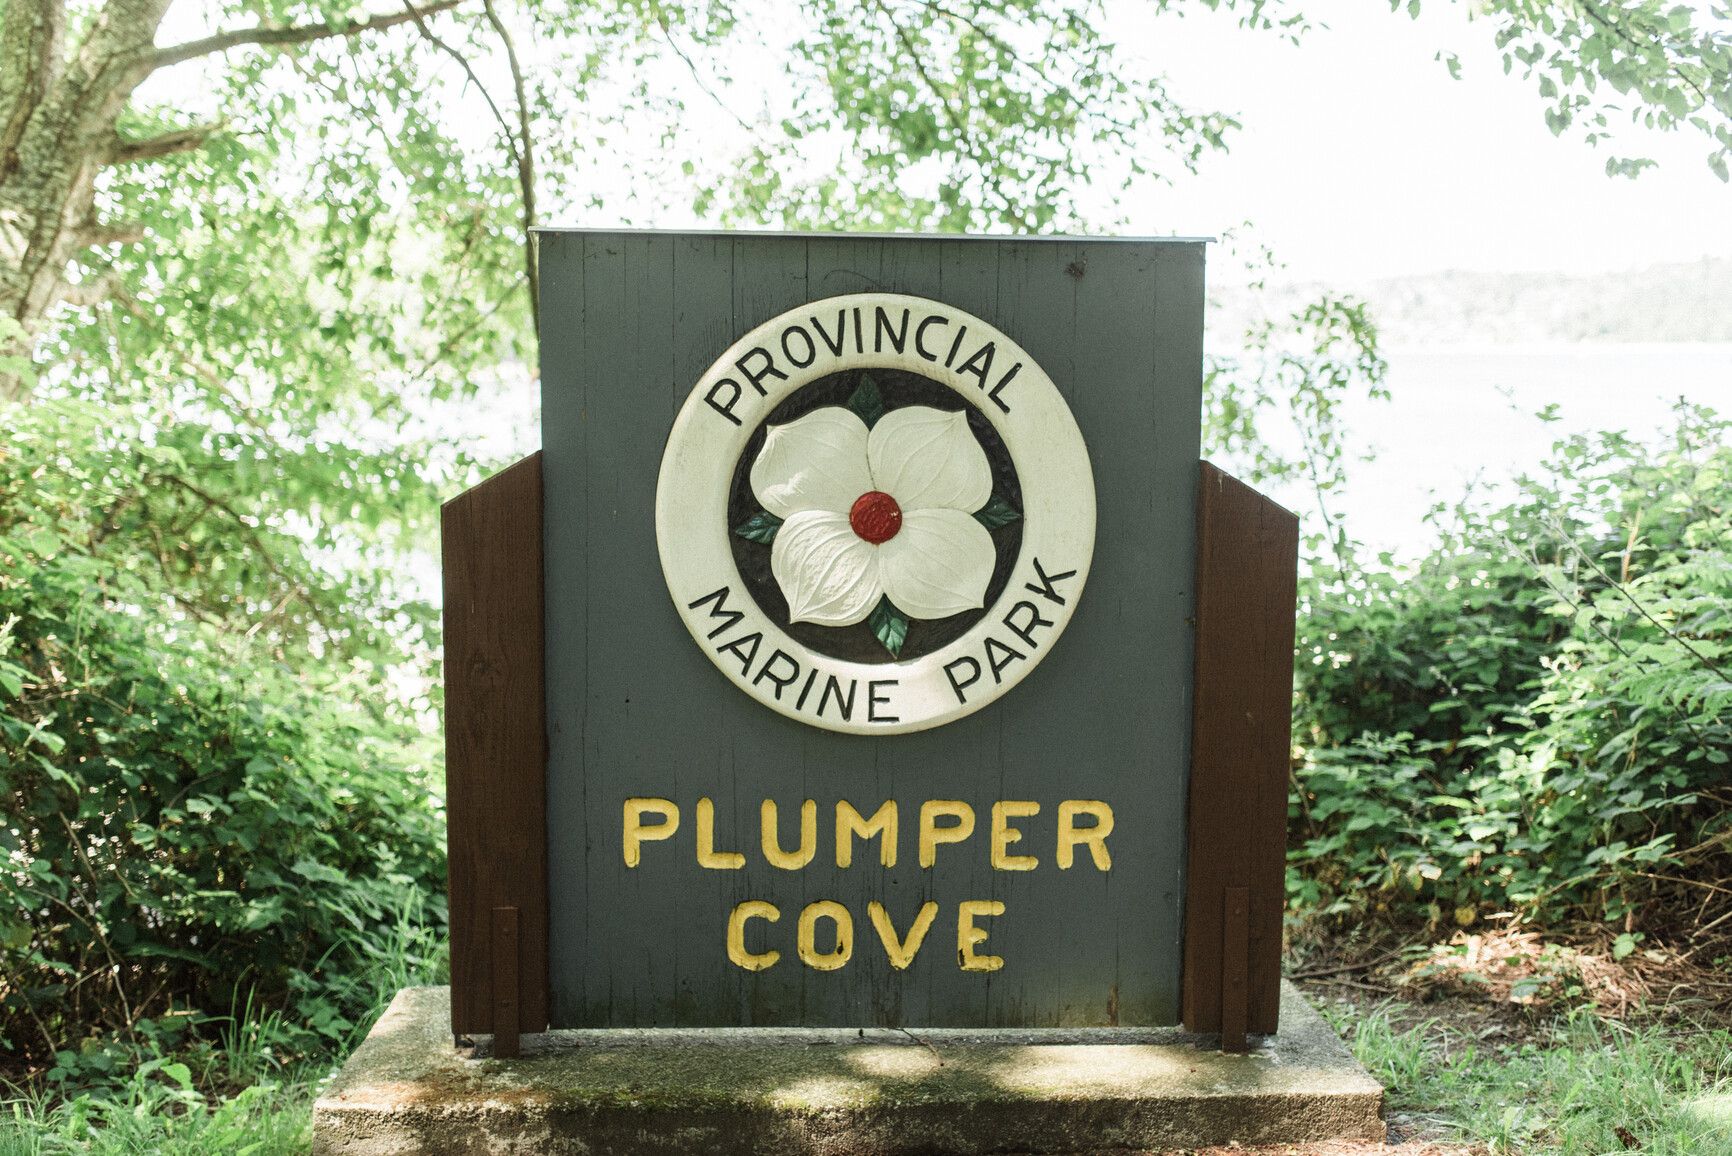 Marine portal sign at Plumper Cove Marine Park.